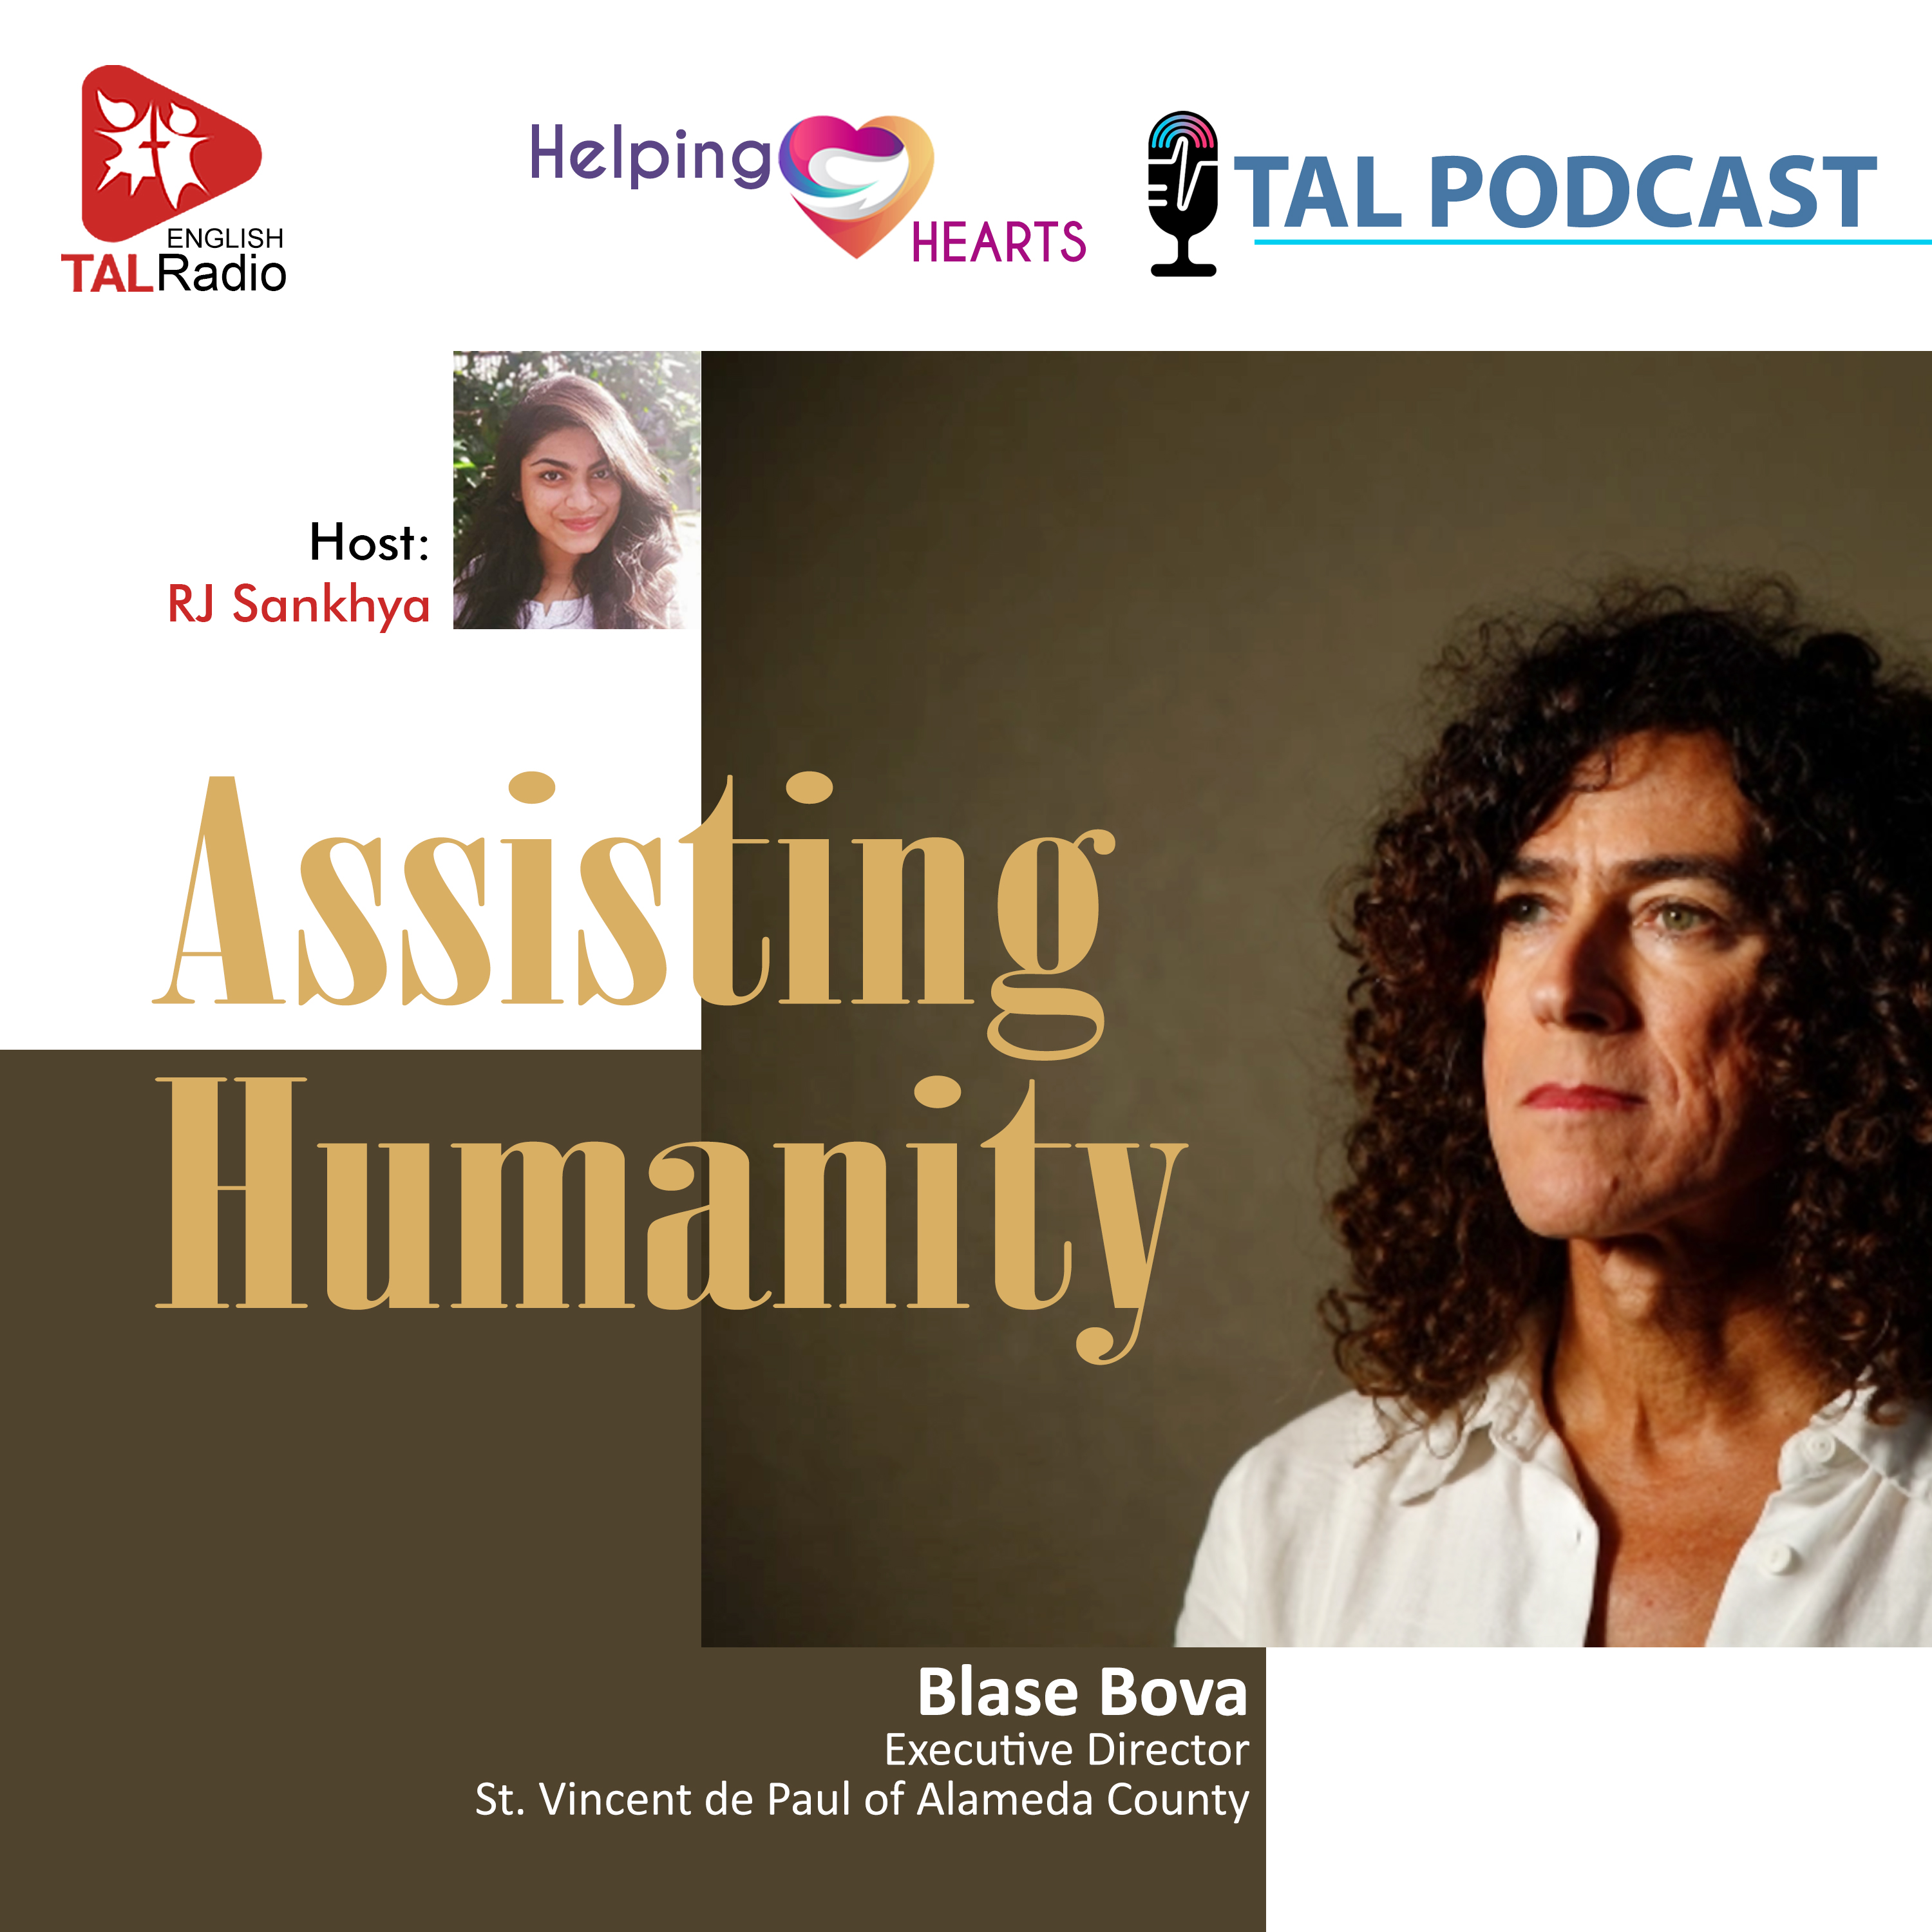 Helping Hearts | Assisting Humanity